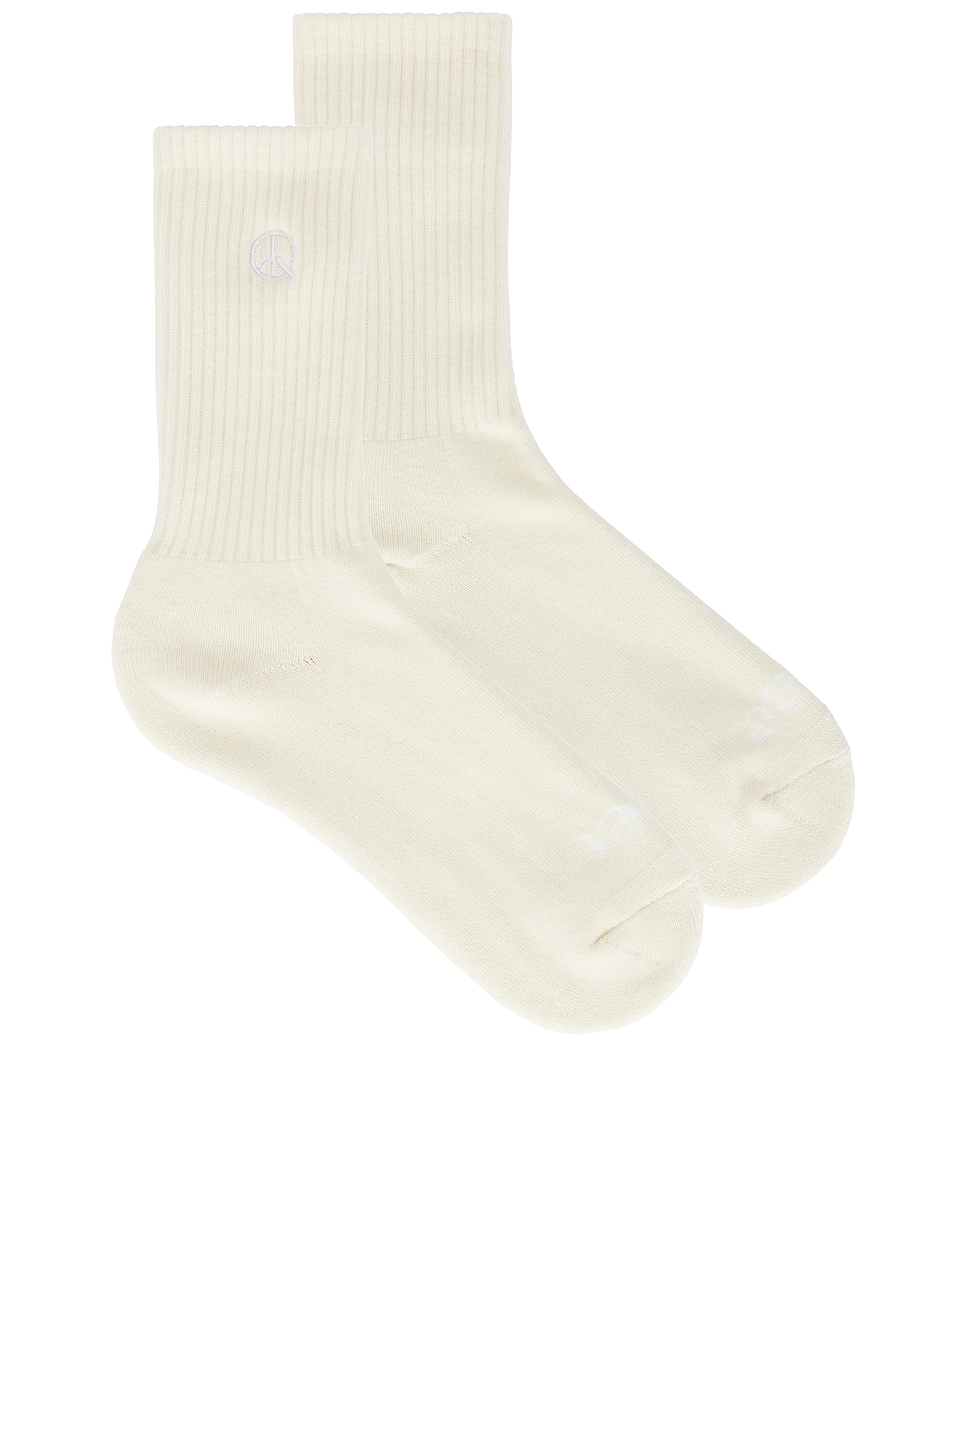 Icon Socks in Cream